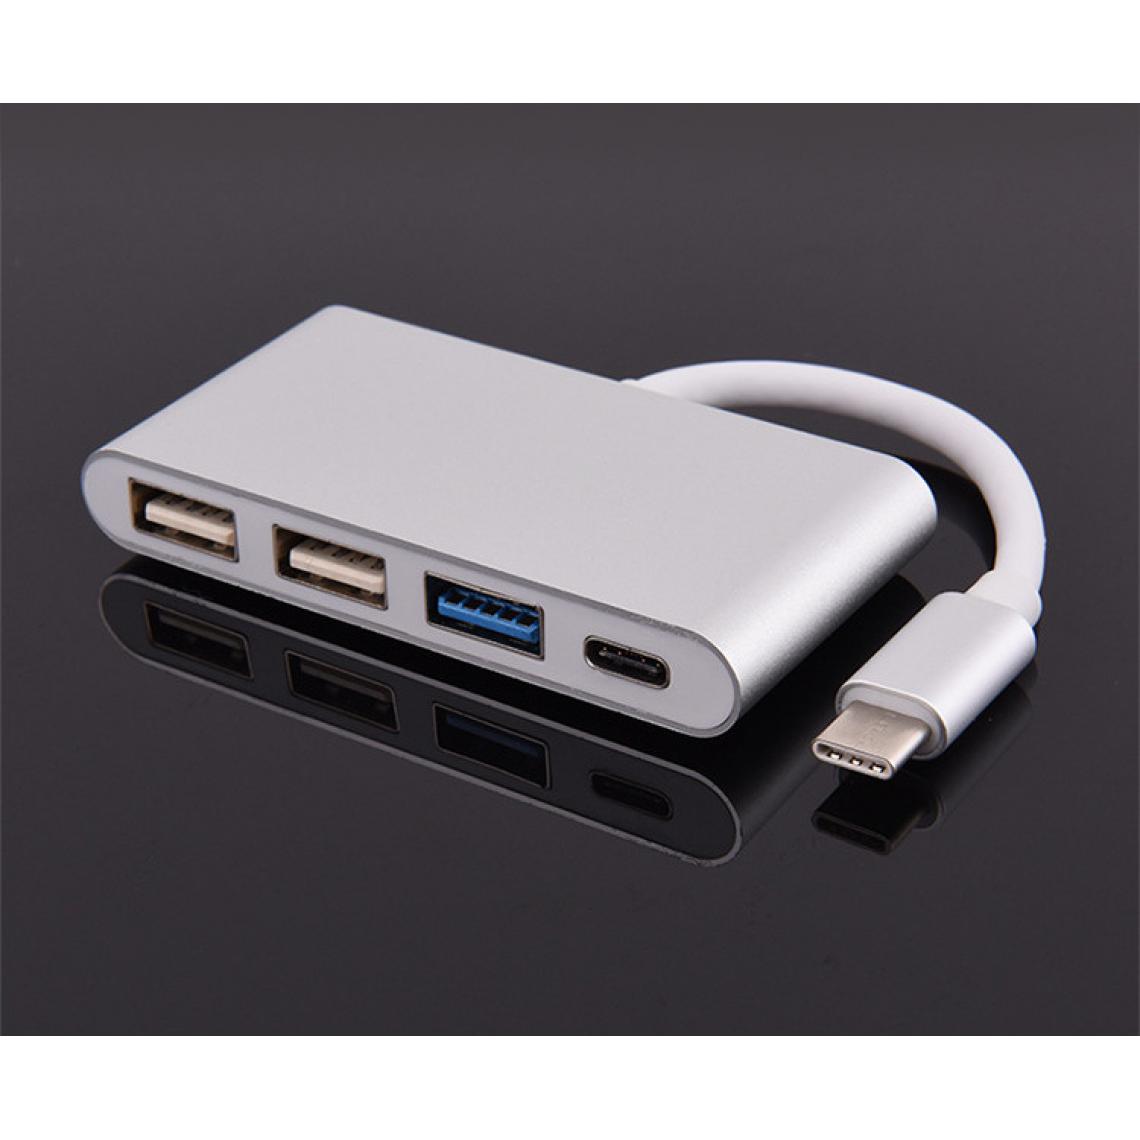 Shot - Multi Adaptateur 4 en 1 Type C pour BLACKBERRY KEY ONE Smartphone Hub 2 ports USB 2.0 1 Port USB 3.0 (ARGENT) - Hub